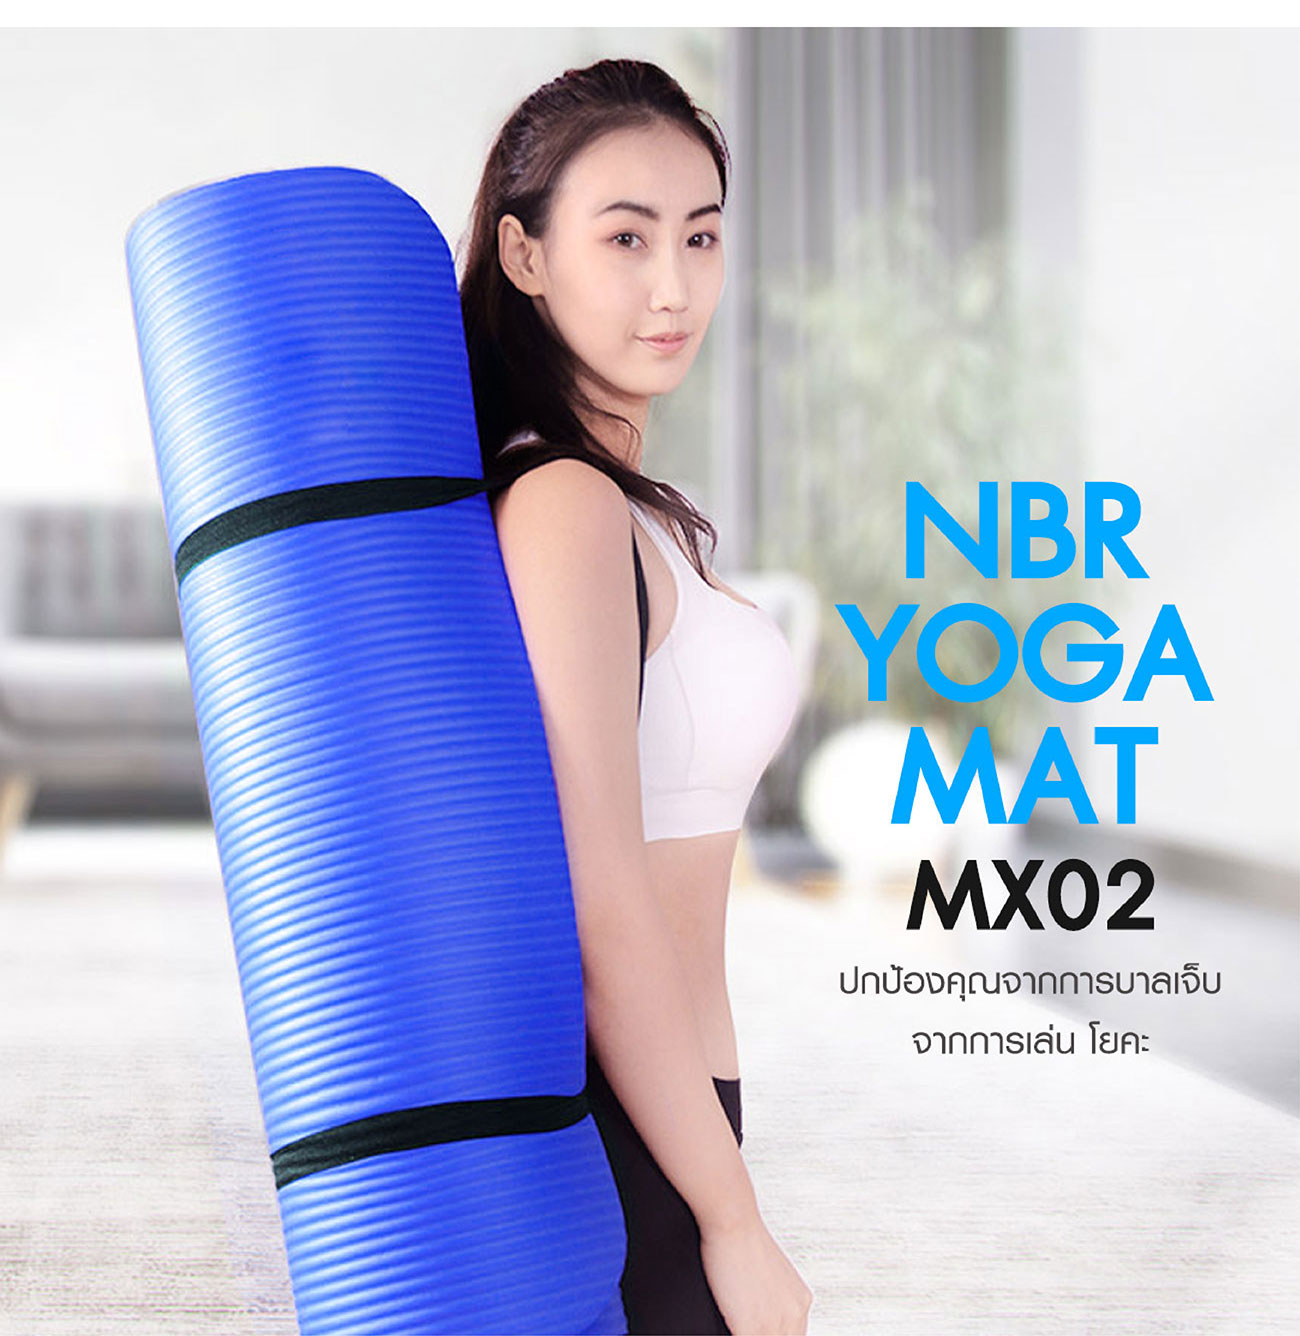 : NBR yoga mat MX02